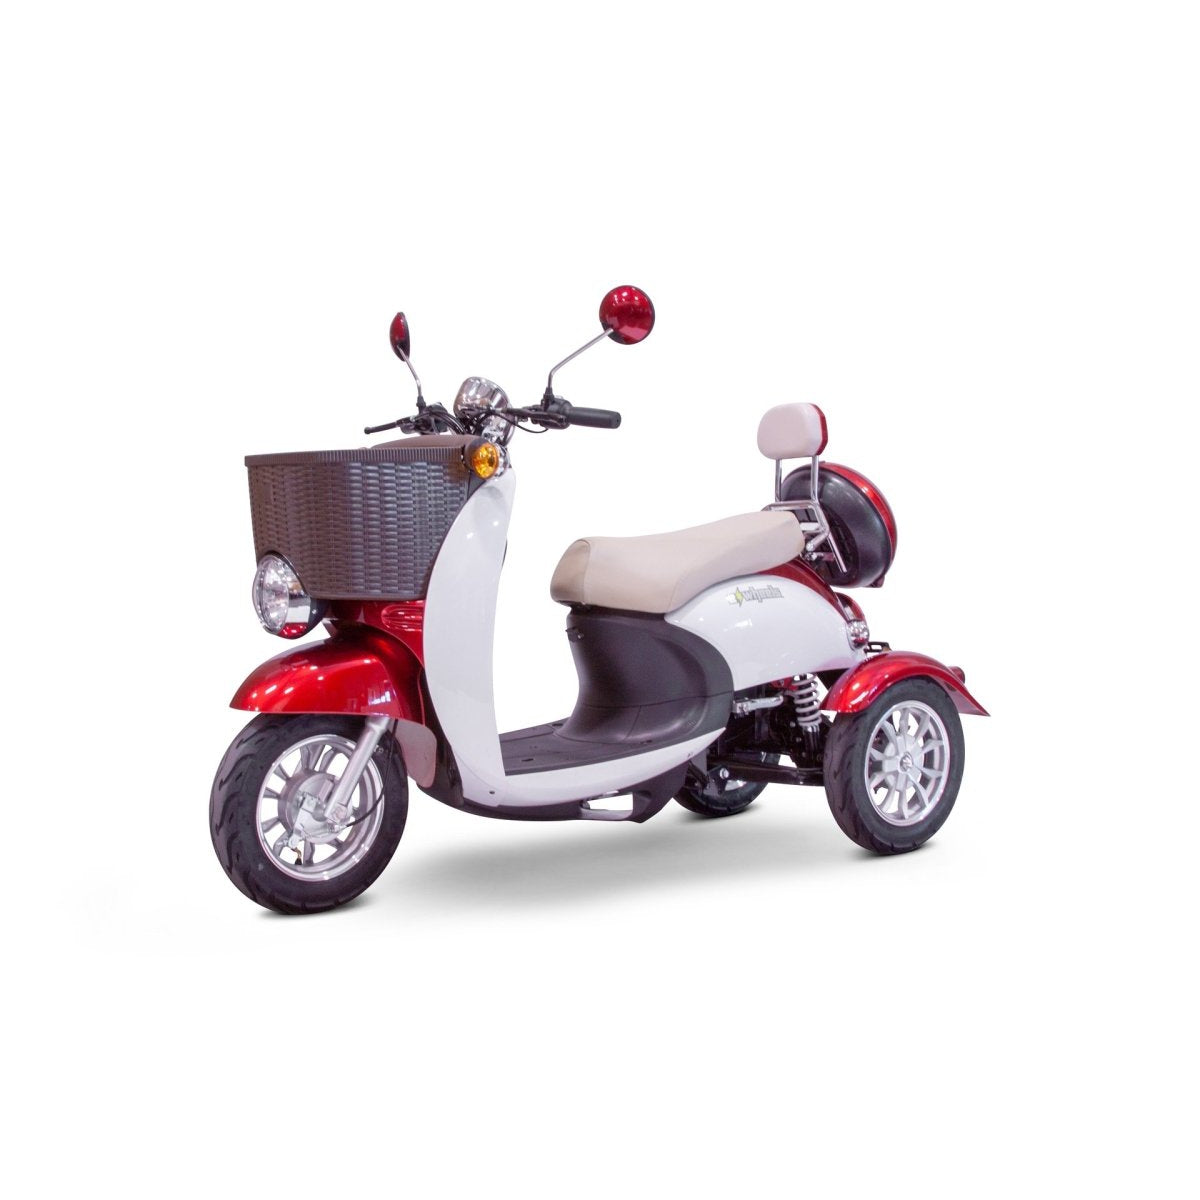 EWheels EW-11 500W 3-Wheel Sport Euro Style Mobility Scooter - Ebikecentric